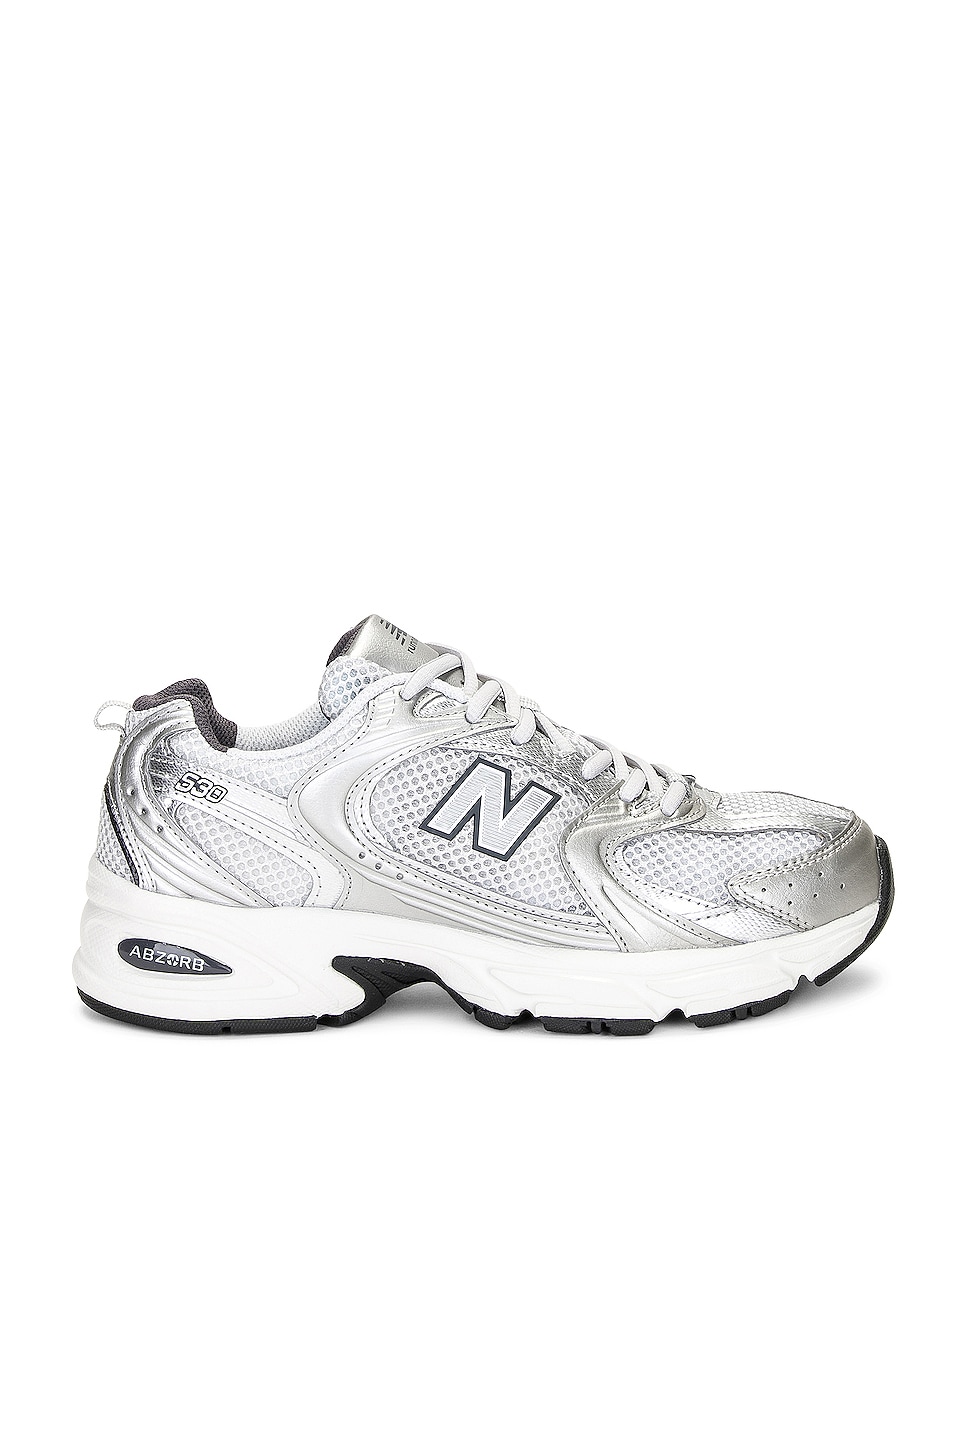 Image 1 of New Balance 530 Sneaker in Grey Matter, Silver Metallic, & Magnet